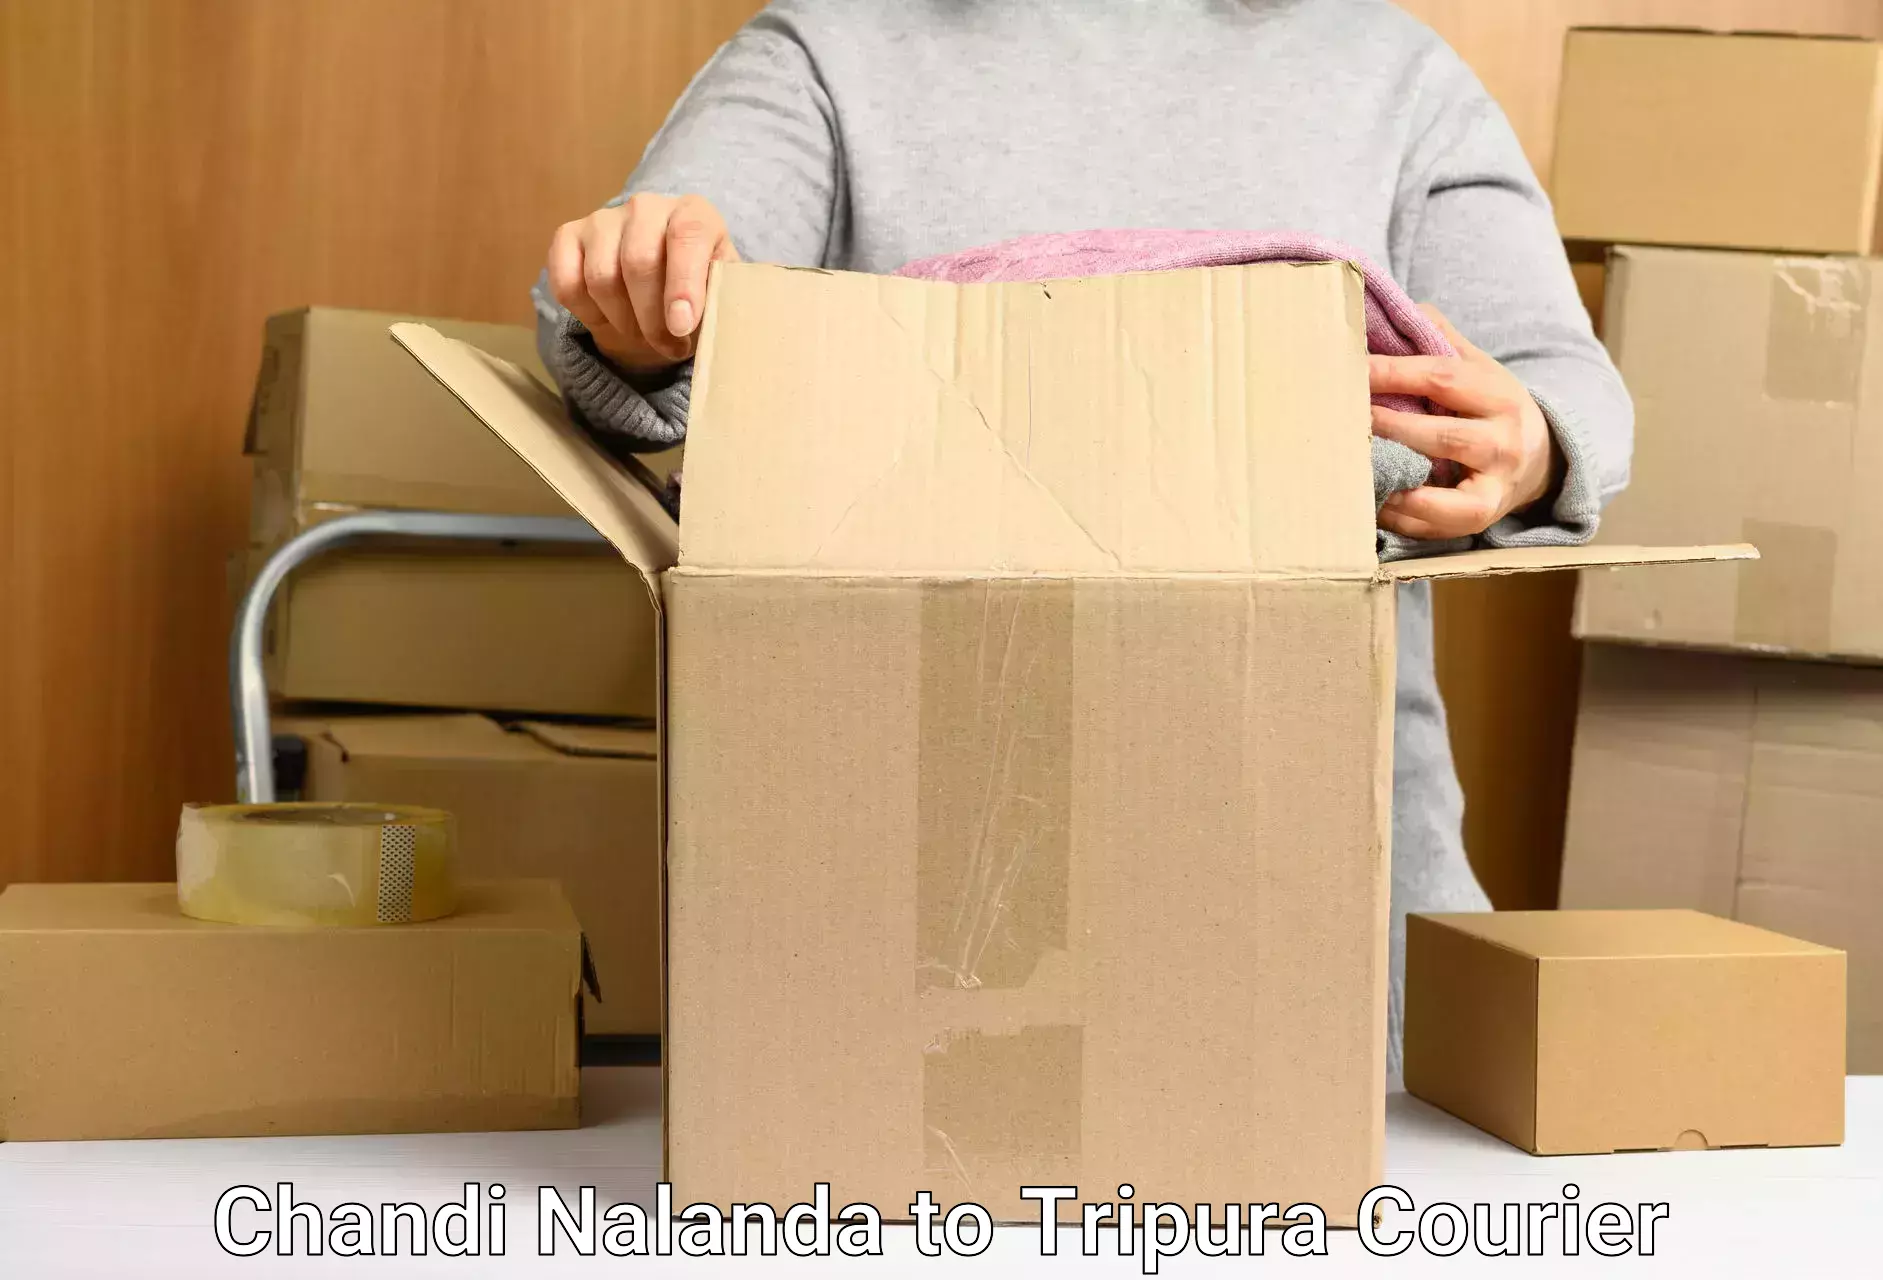 Reliable parcel services Chandi Nalanda to Kailashahar